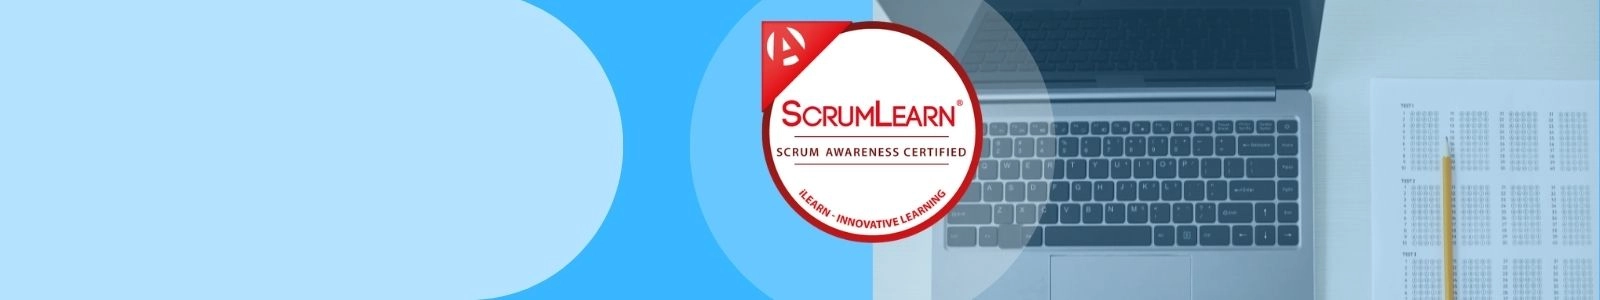 Get Scrum Awareness Certified for FREE!